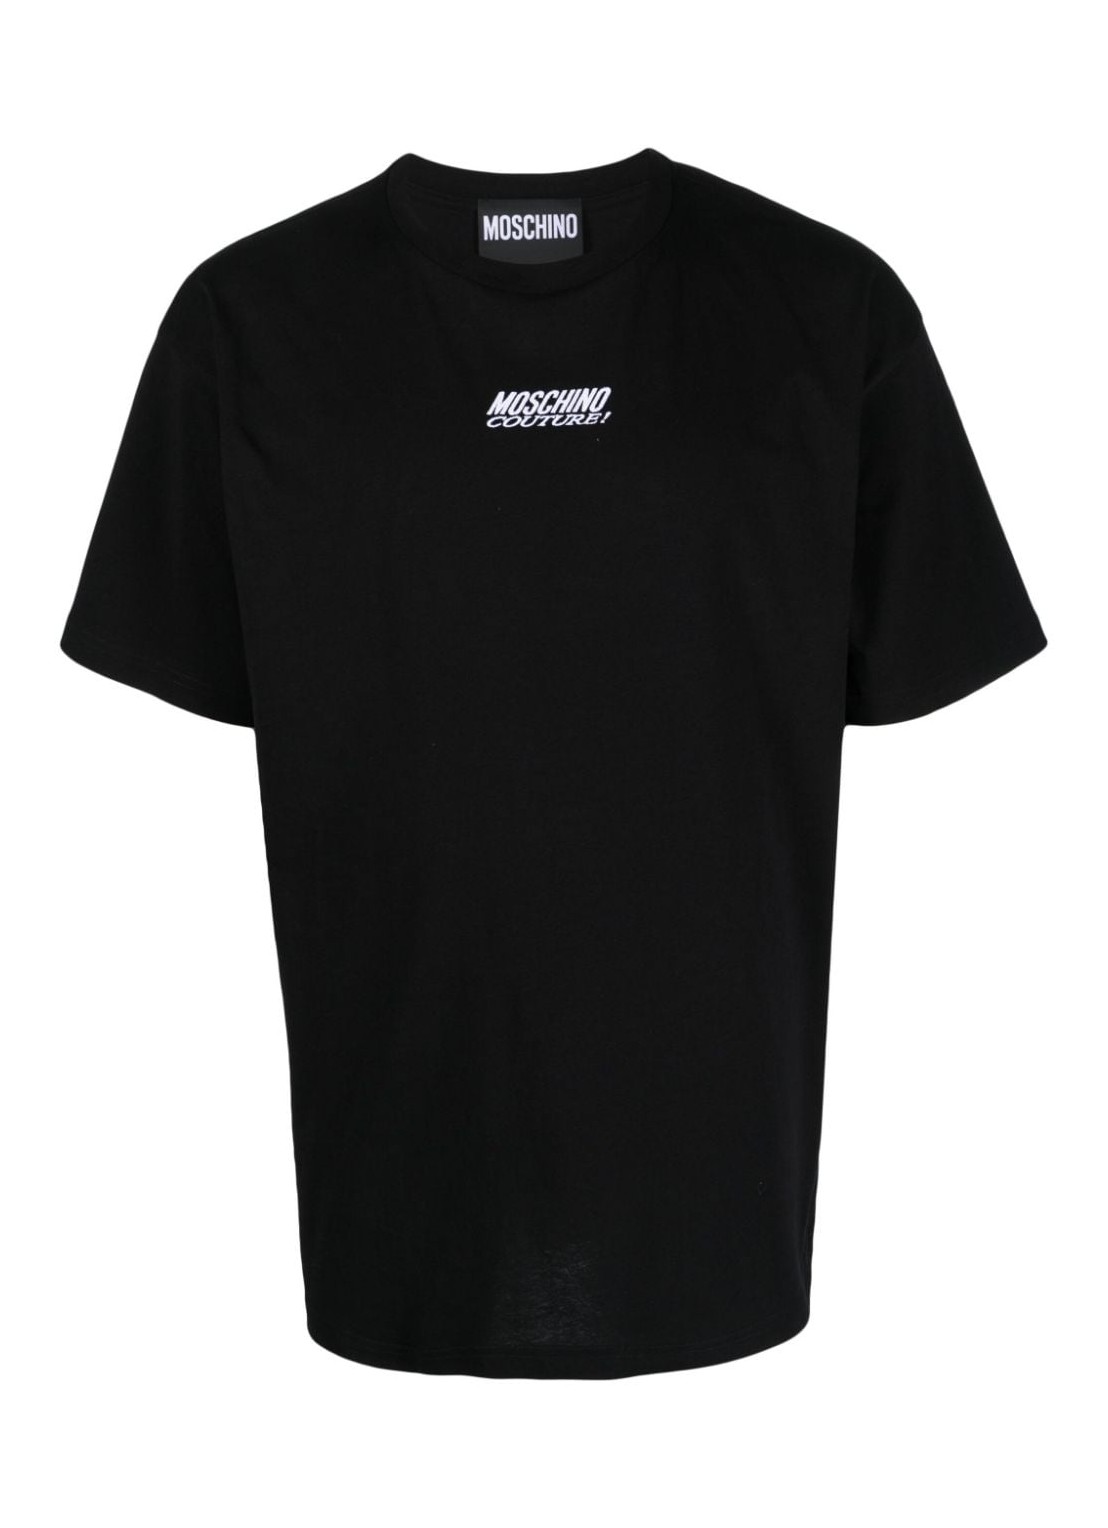 Camiseta moschino couture t-shirt man t-shirt 07202040 a1555 talla L
 